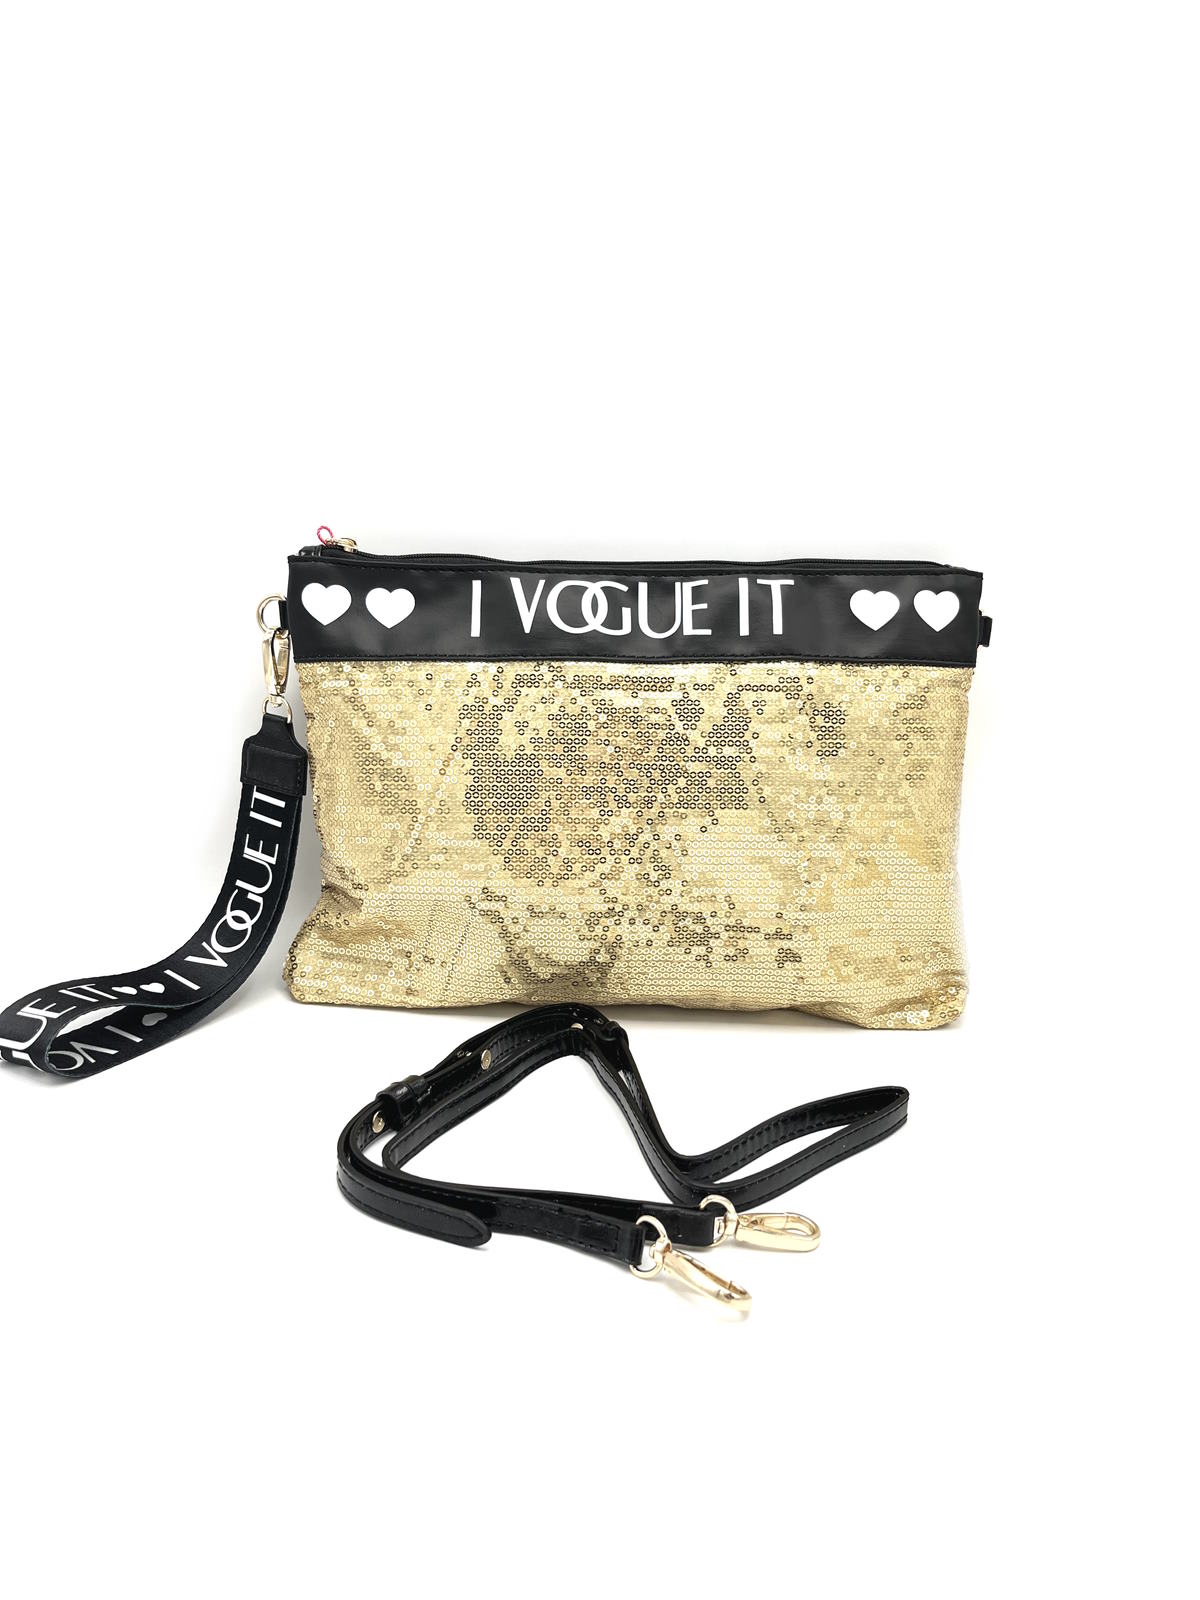 Eco-leather crossbody bag, brand I Vogue It, art. 20433.364